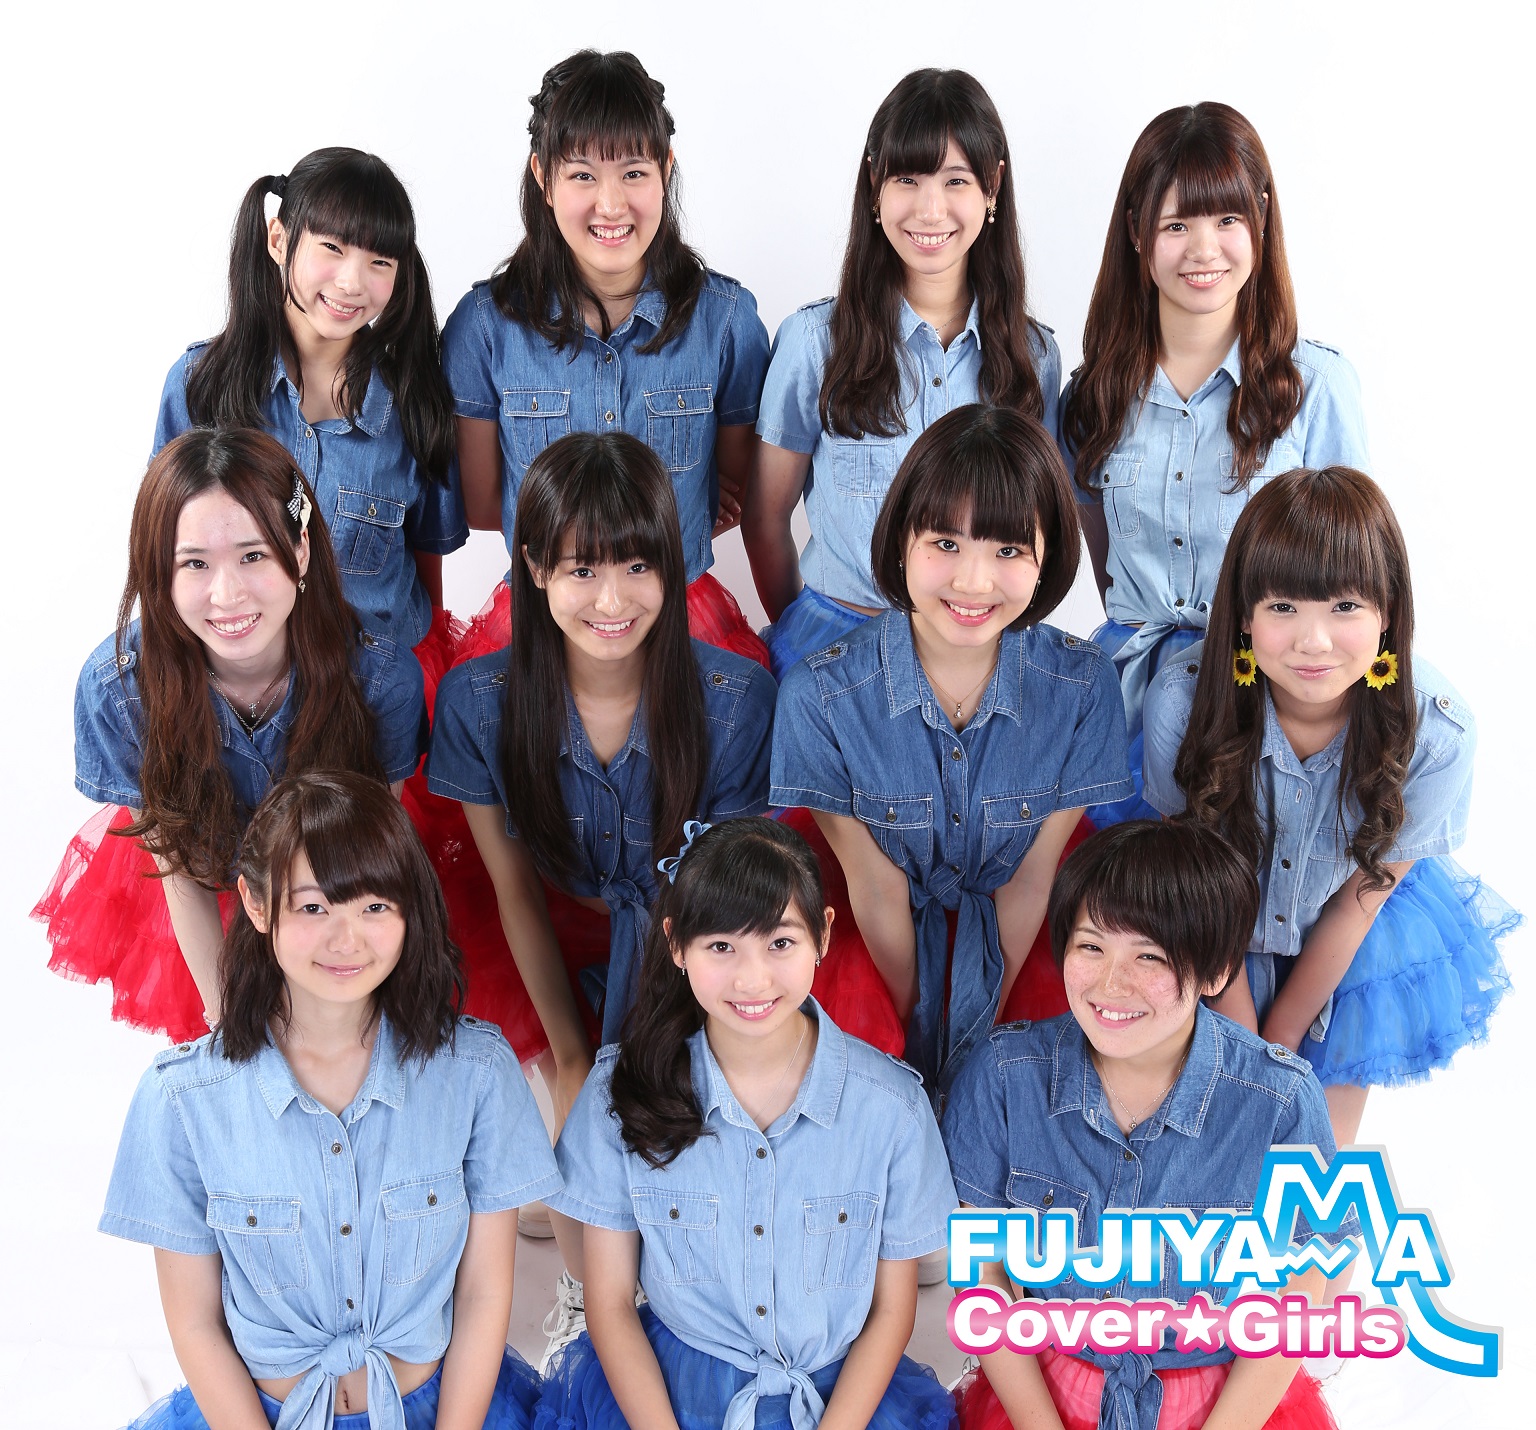 FUJIYAMA Cover Girls